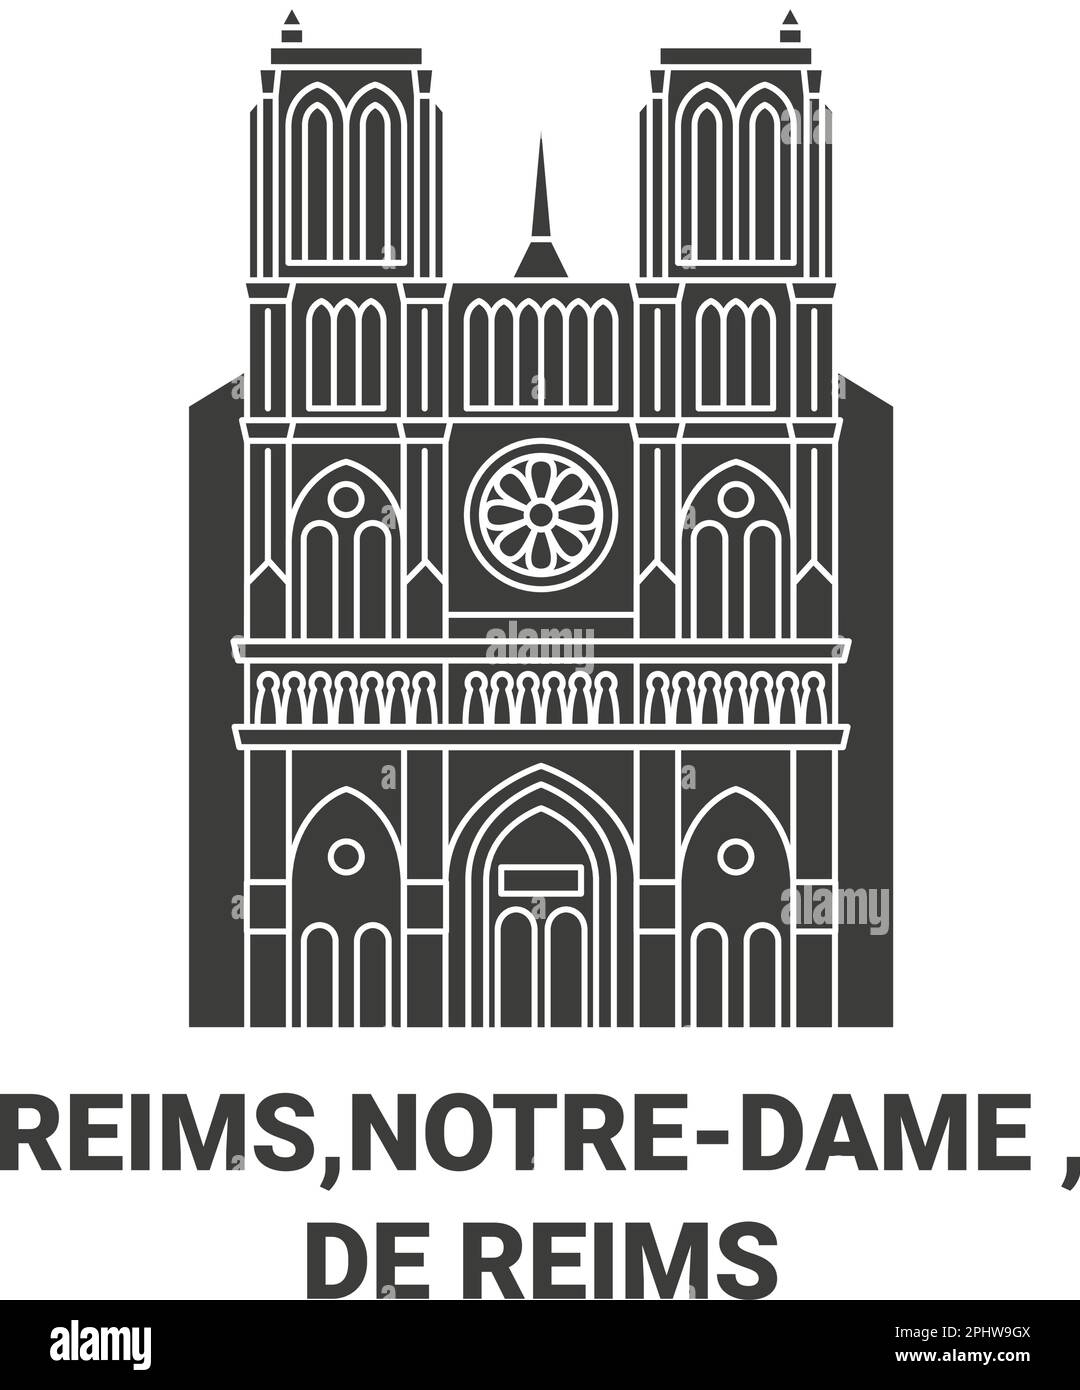 Frankreich, Reims, Notredame, De Reims Reise Landmark Vektordarstellung Stock Vektor